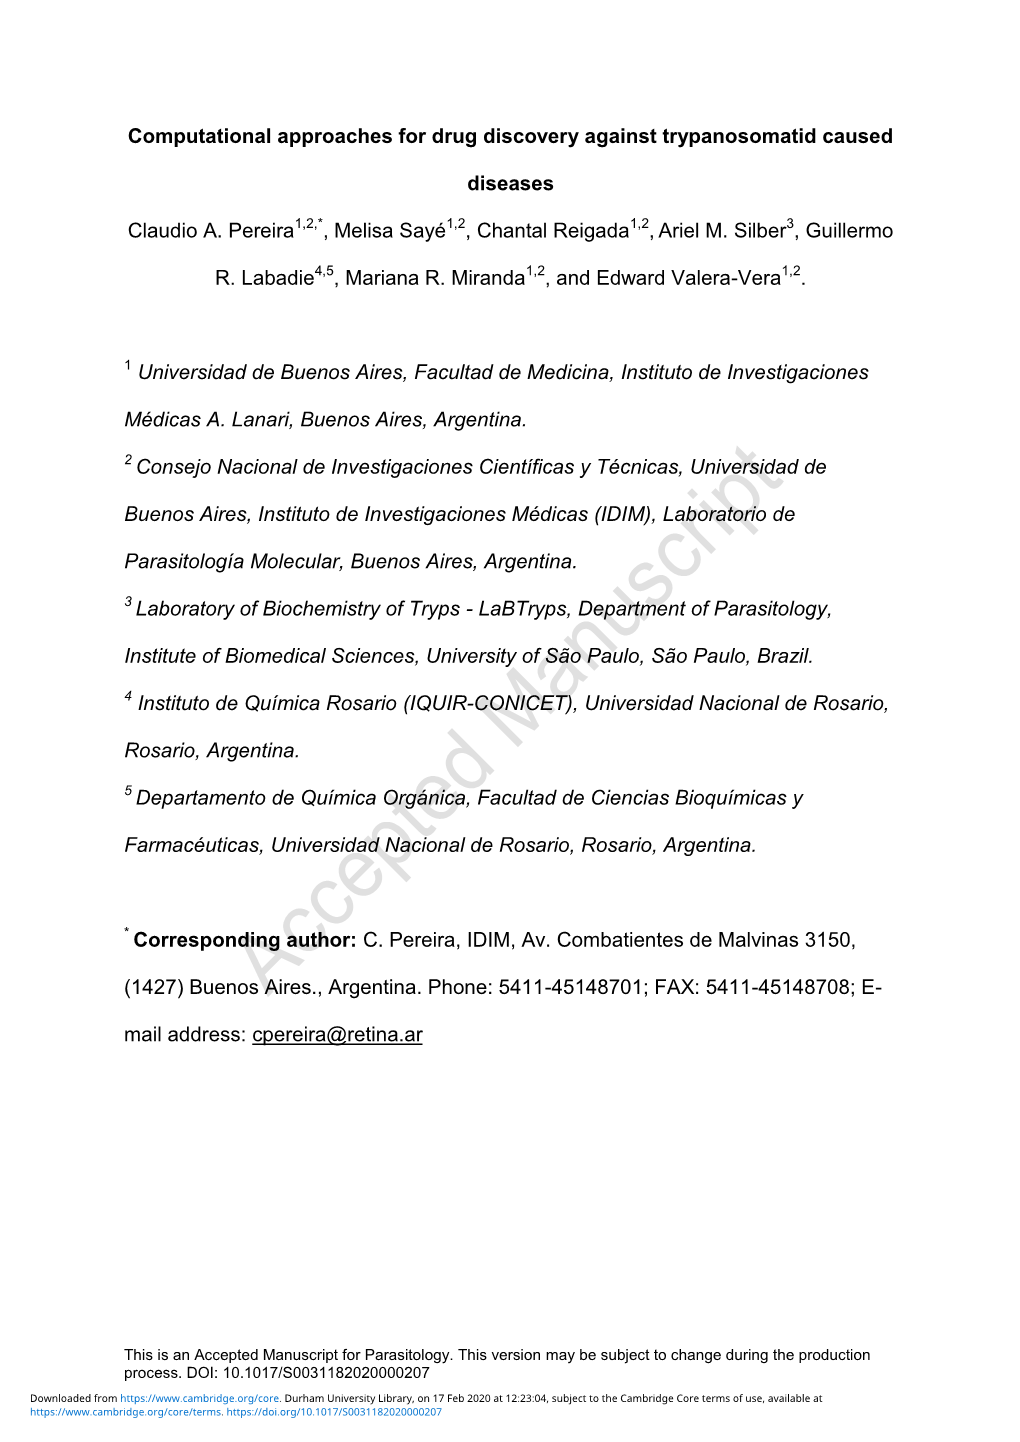 Computational Approaches for Drug Discovery Against Trypanosomatid Caused Diseases Claudio A. Pereira1,2,*, Melisa Sayé1,2